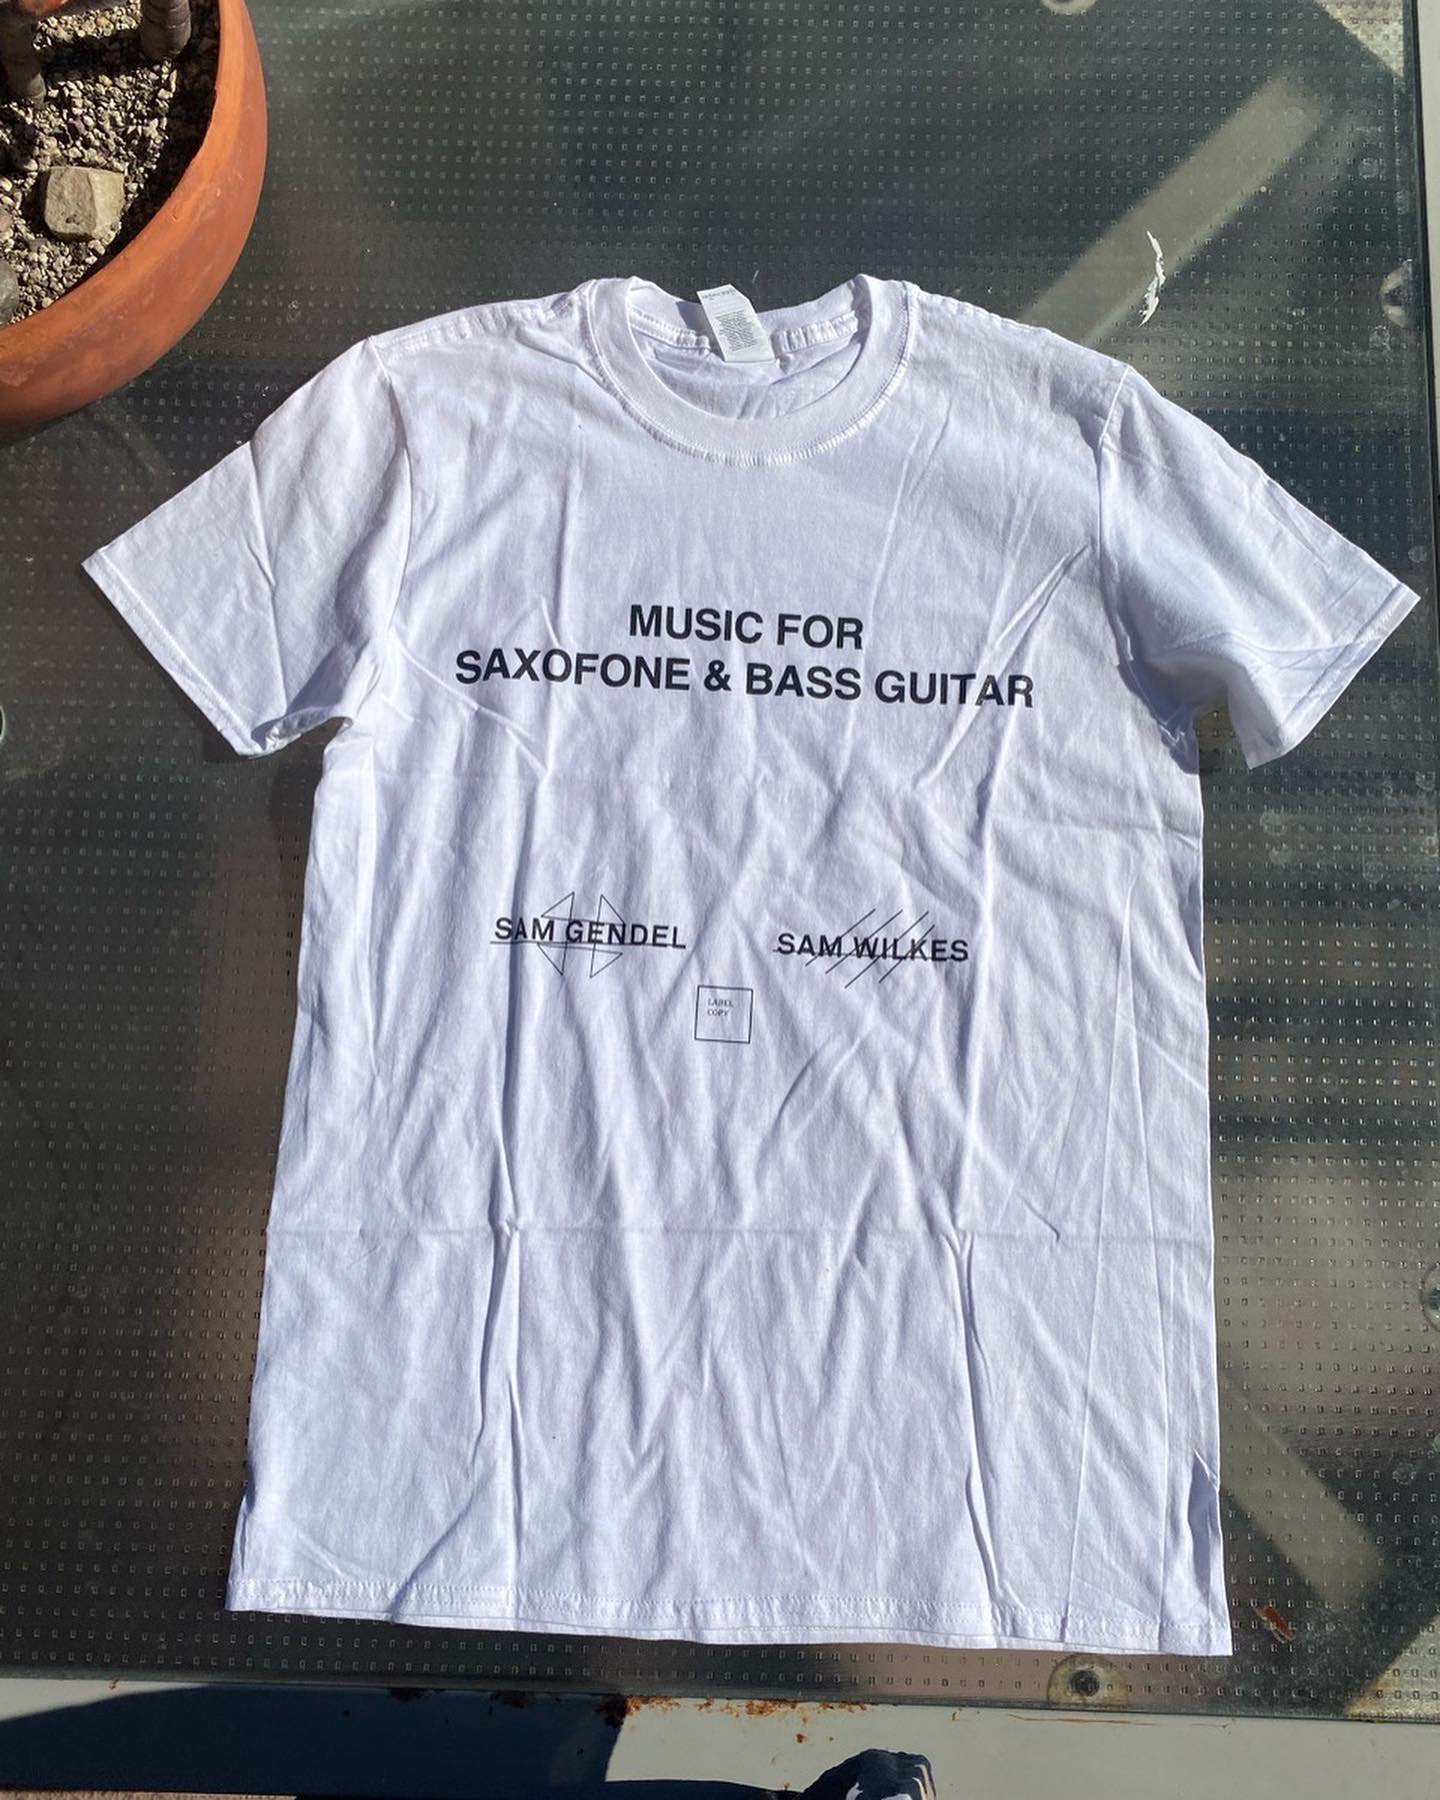  SAM GENDEL & SAM WILKS / MUSIC FOR SAXOFONE & BASS GUITAR T shirts 